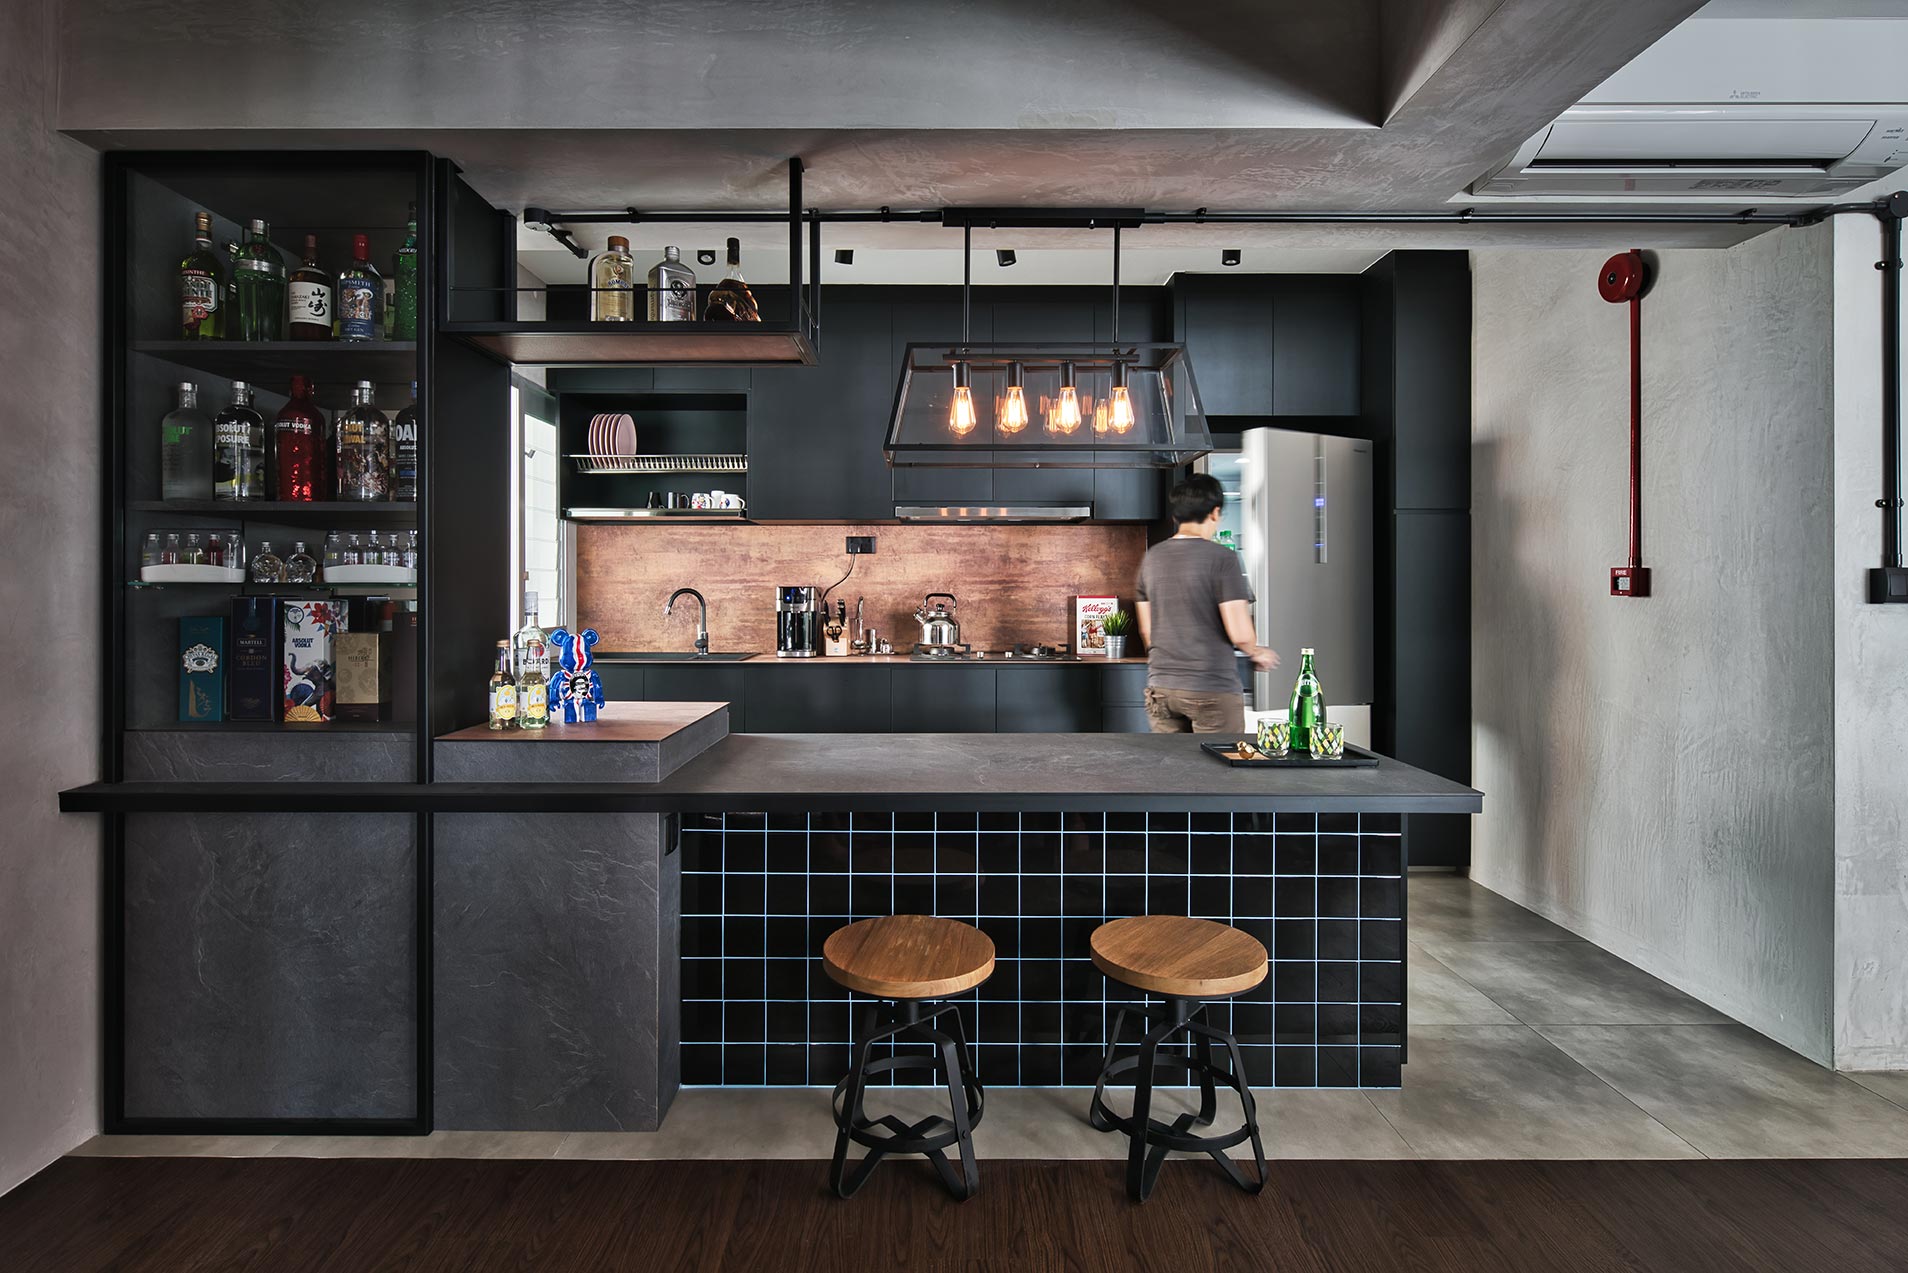 squarerooms-kitchen-open-space-black-dark-stone-aesthetic